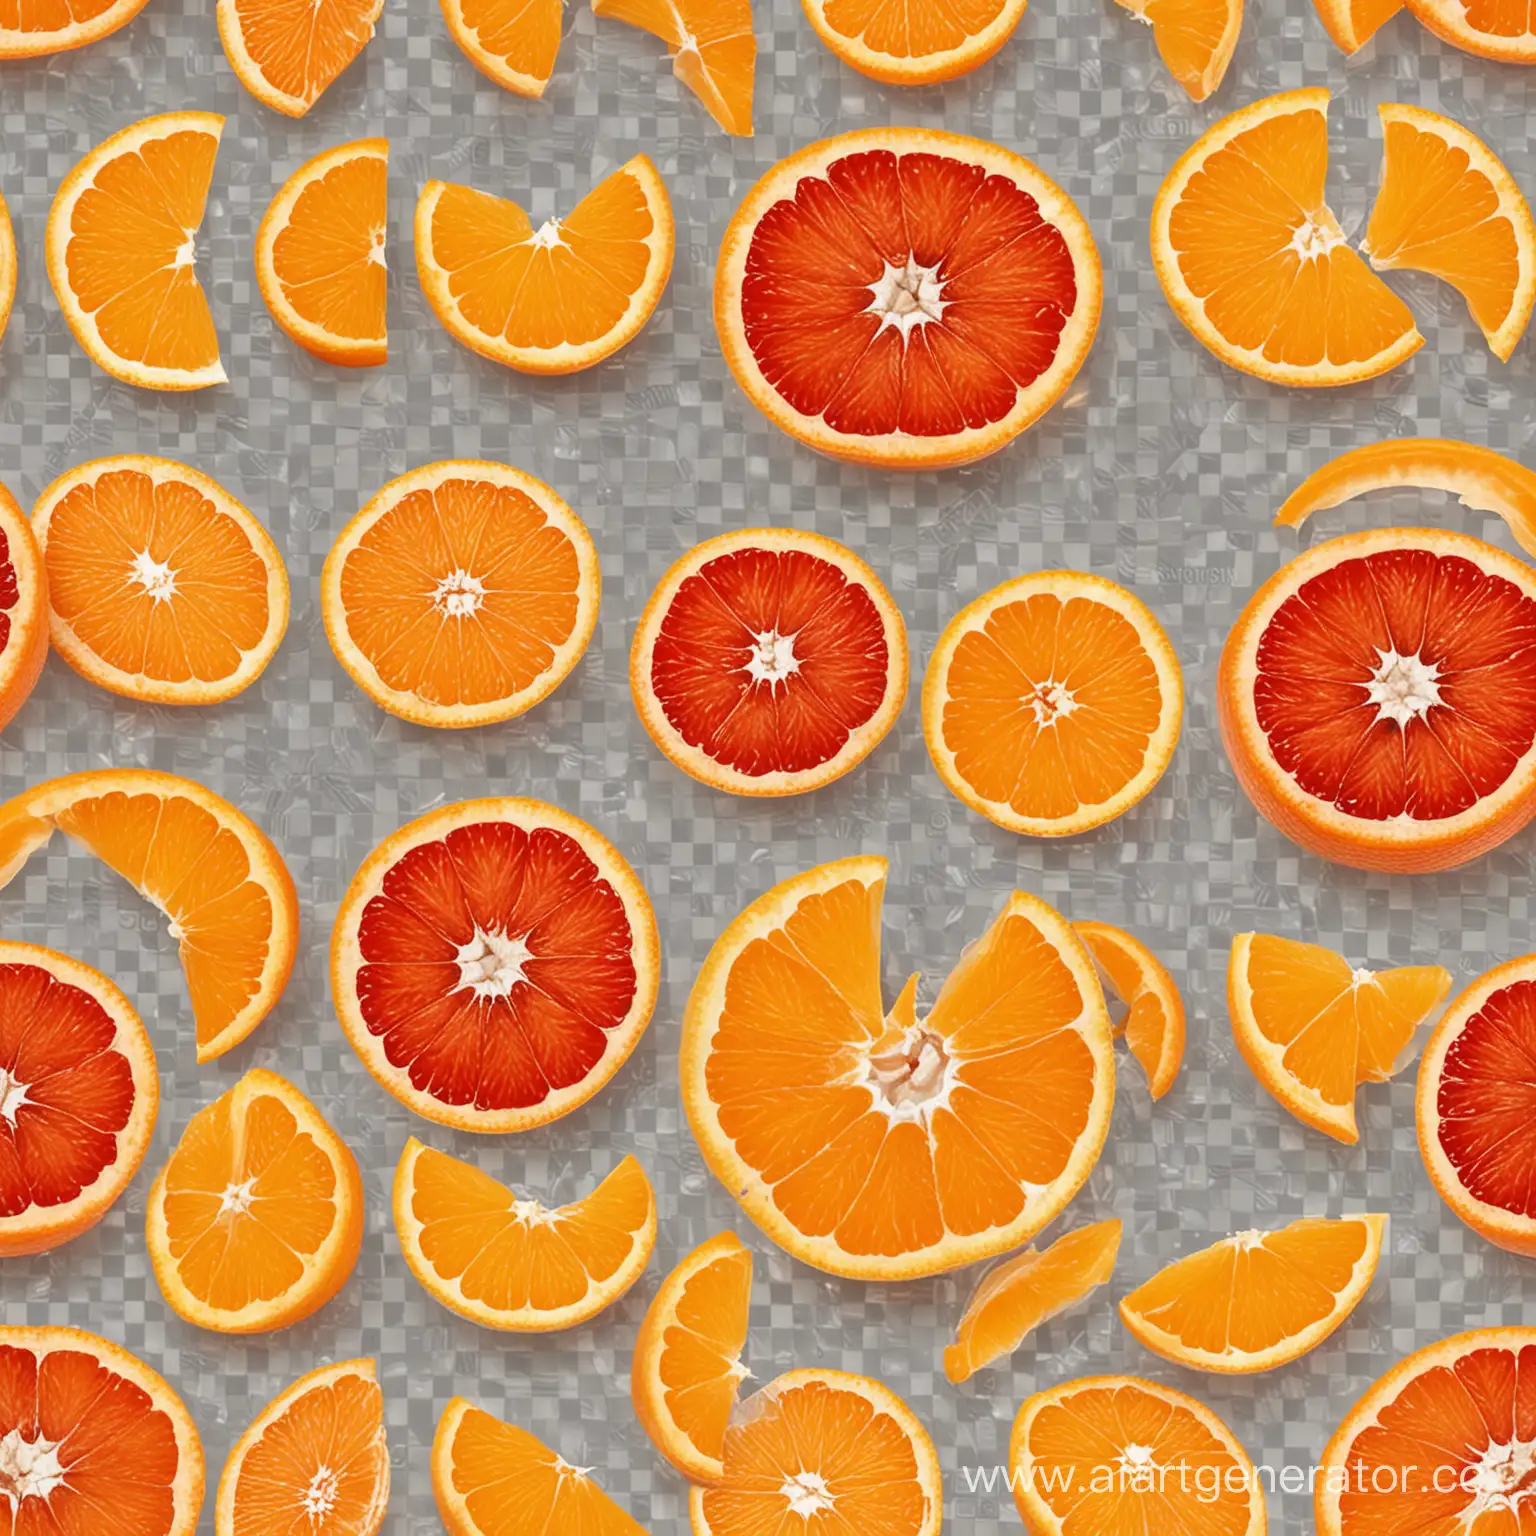 Colorful-Citrus-Slices-on-Transparent-Background